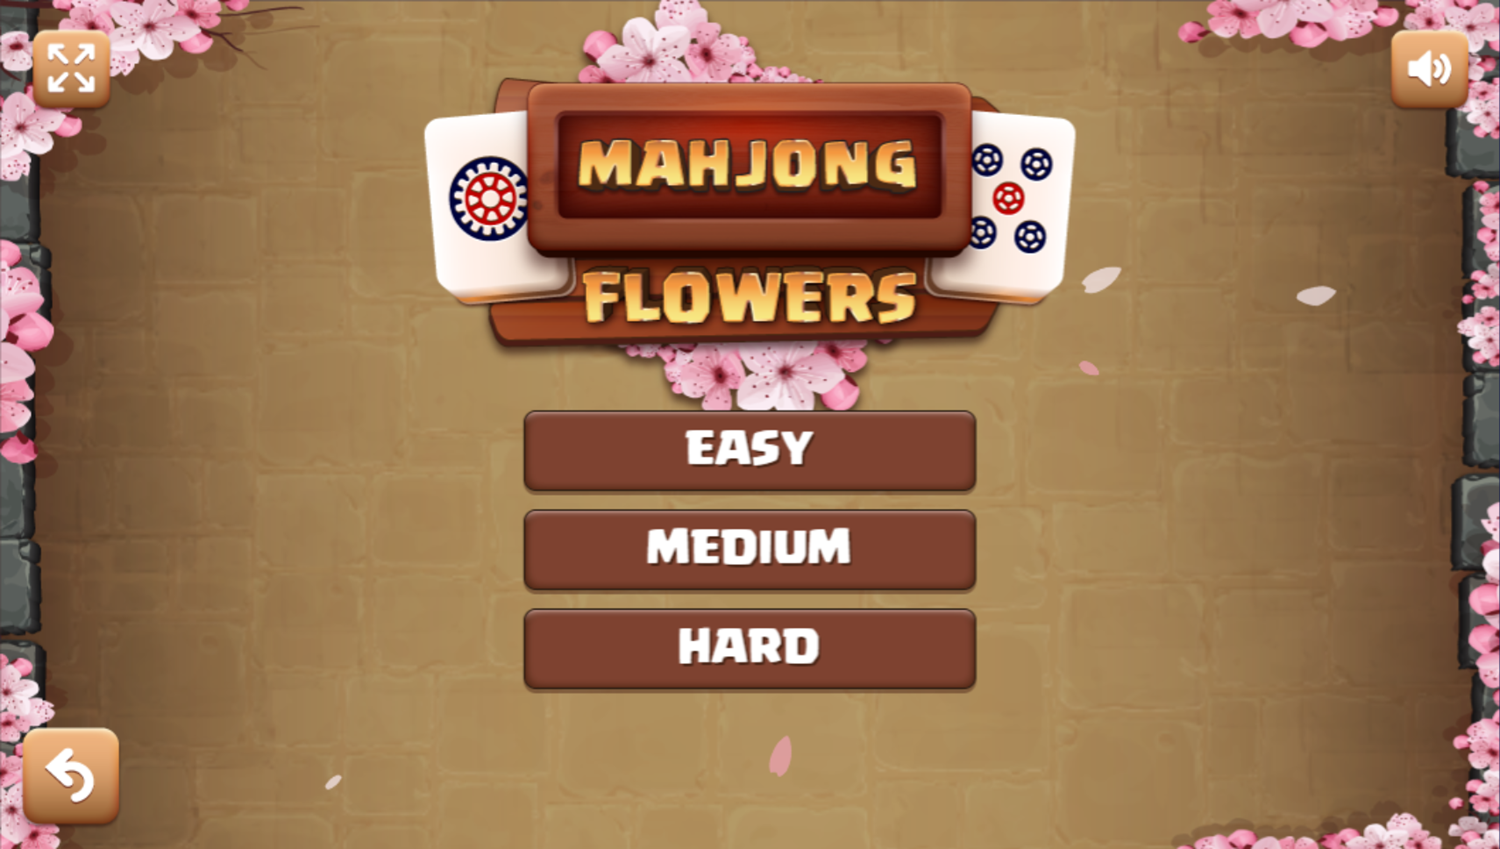 Mahjong Flowers Game Difficulty Select Screenshot.